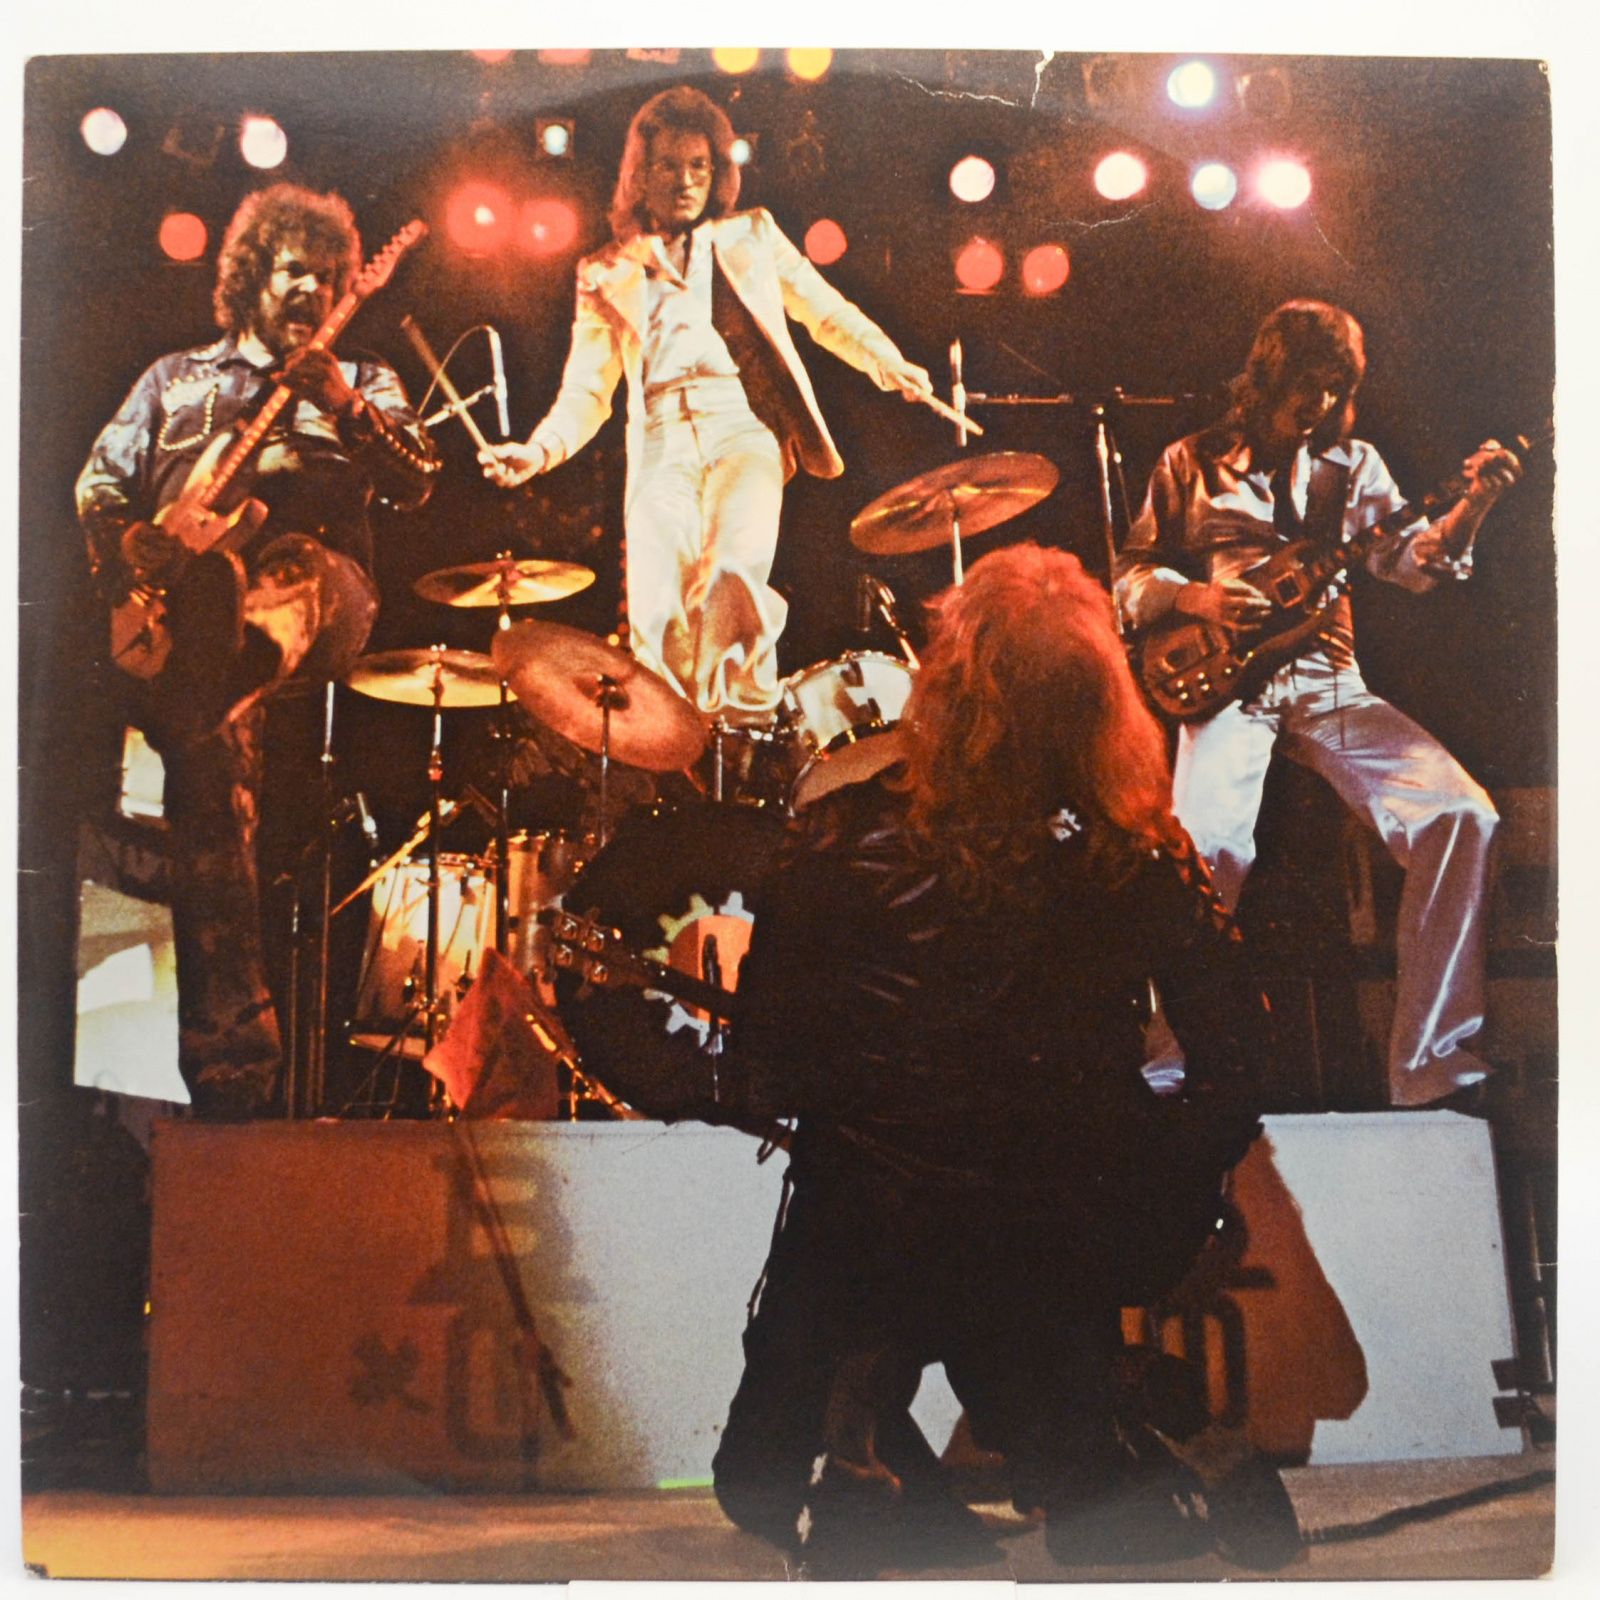 Bachman-Turner Overdrive — Four Wheel Drive (USA), 1975